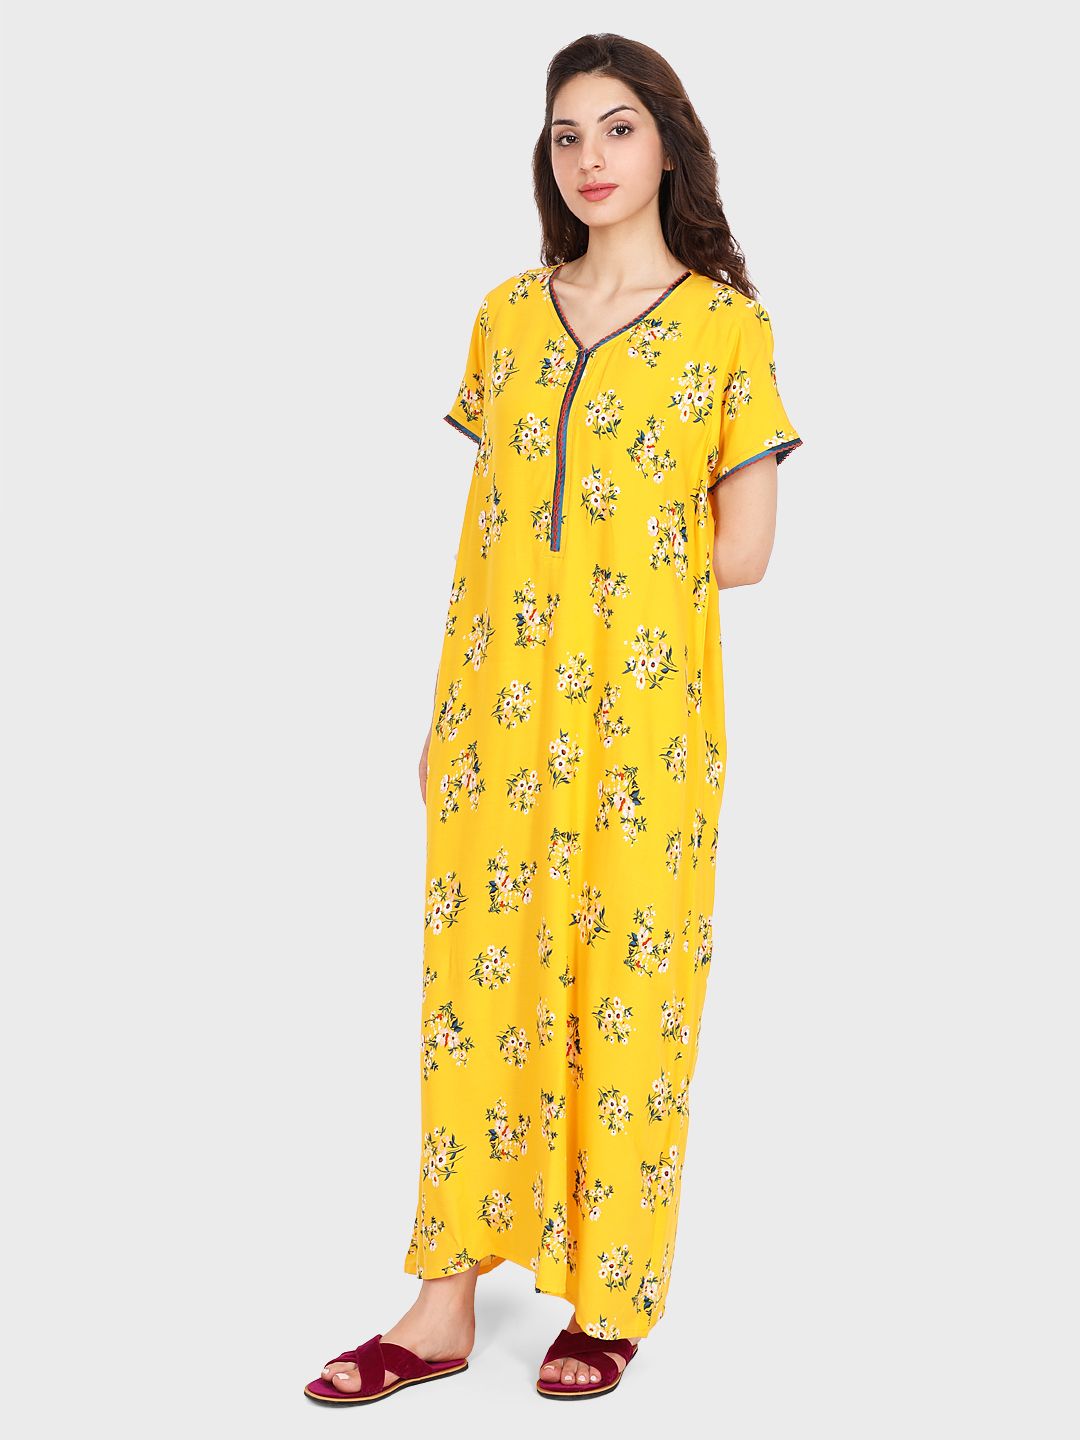 Evolove Women's Rayon Printed Maxi Nighty Sleepwear Super Comfortable (Honey Yellow)